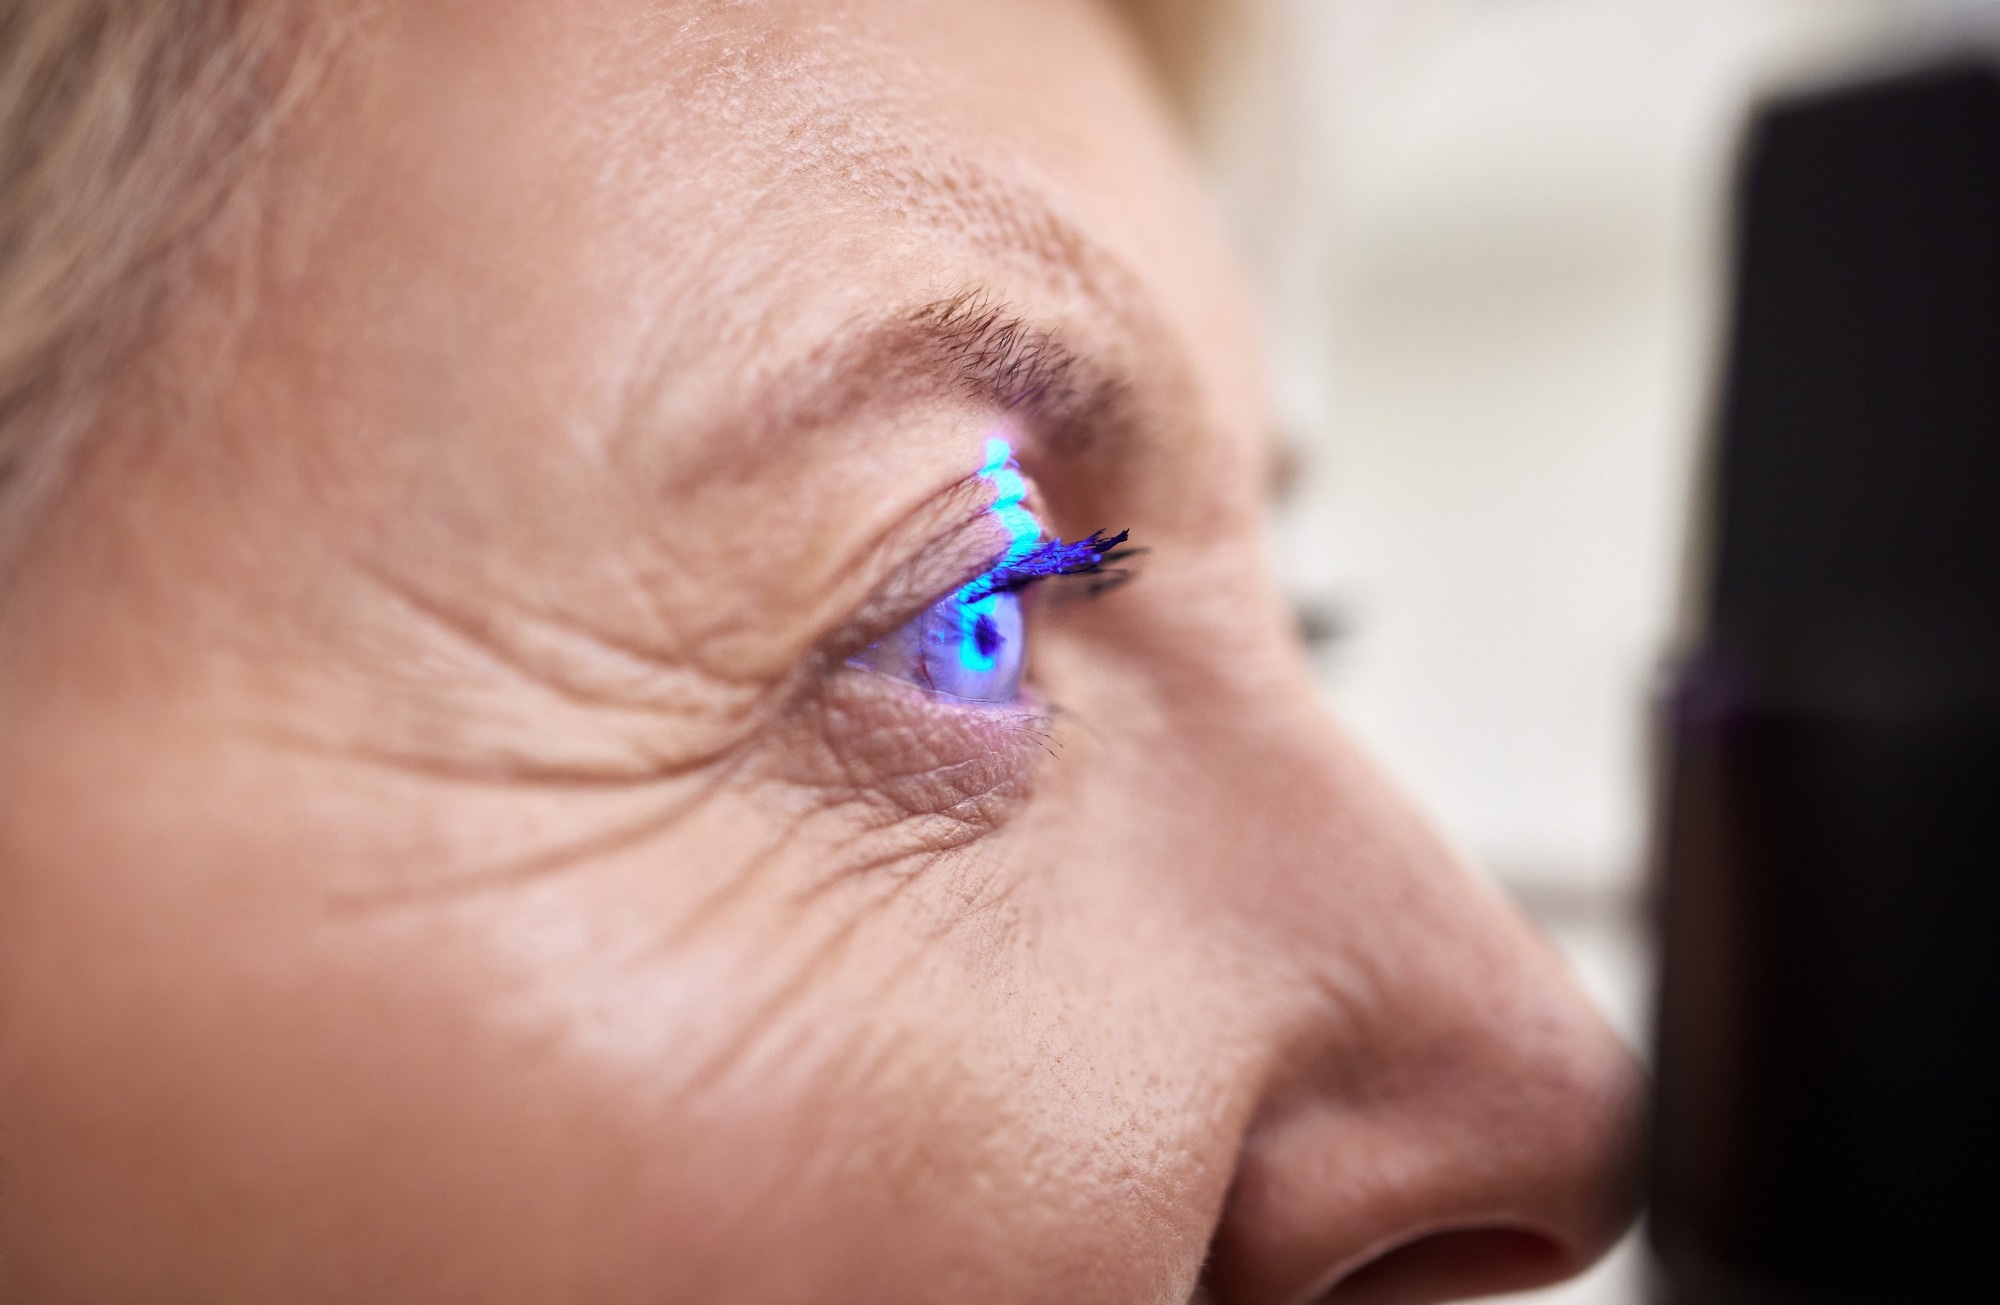 Targeted ocular spectroscopy shines new light on retinal health